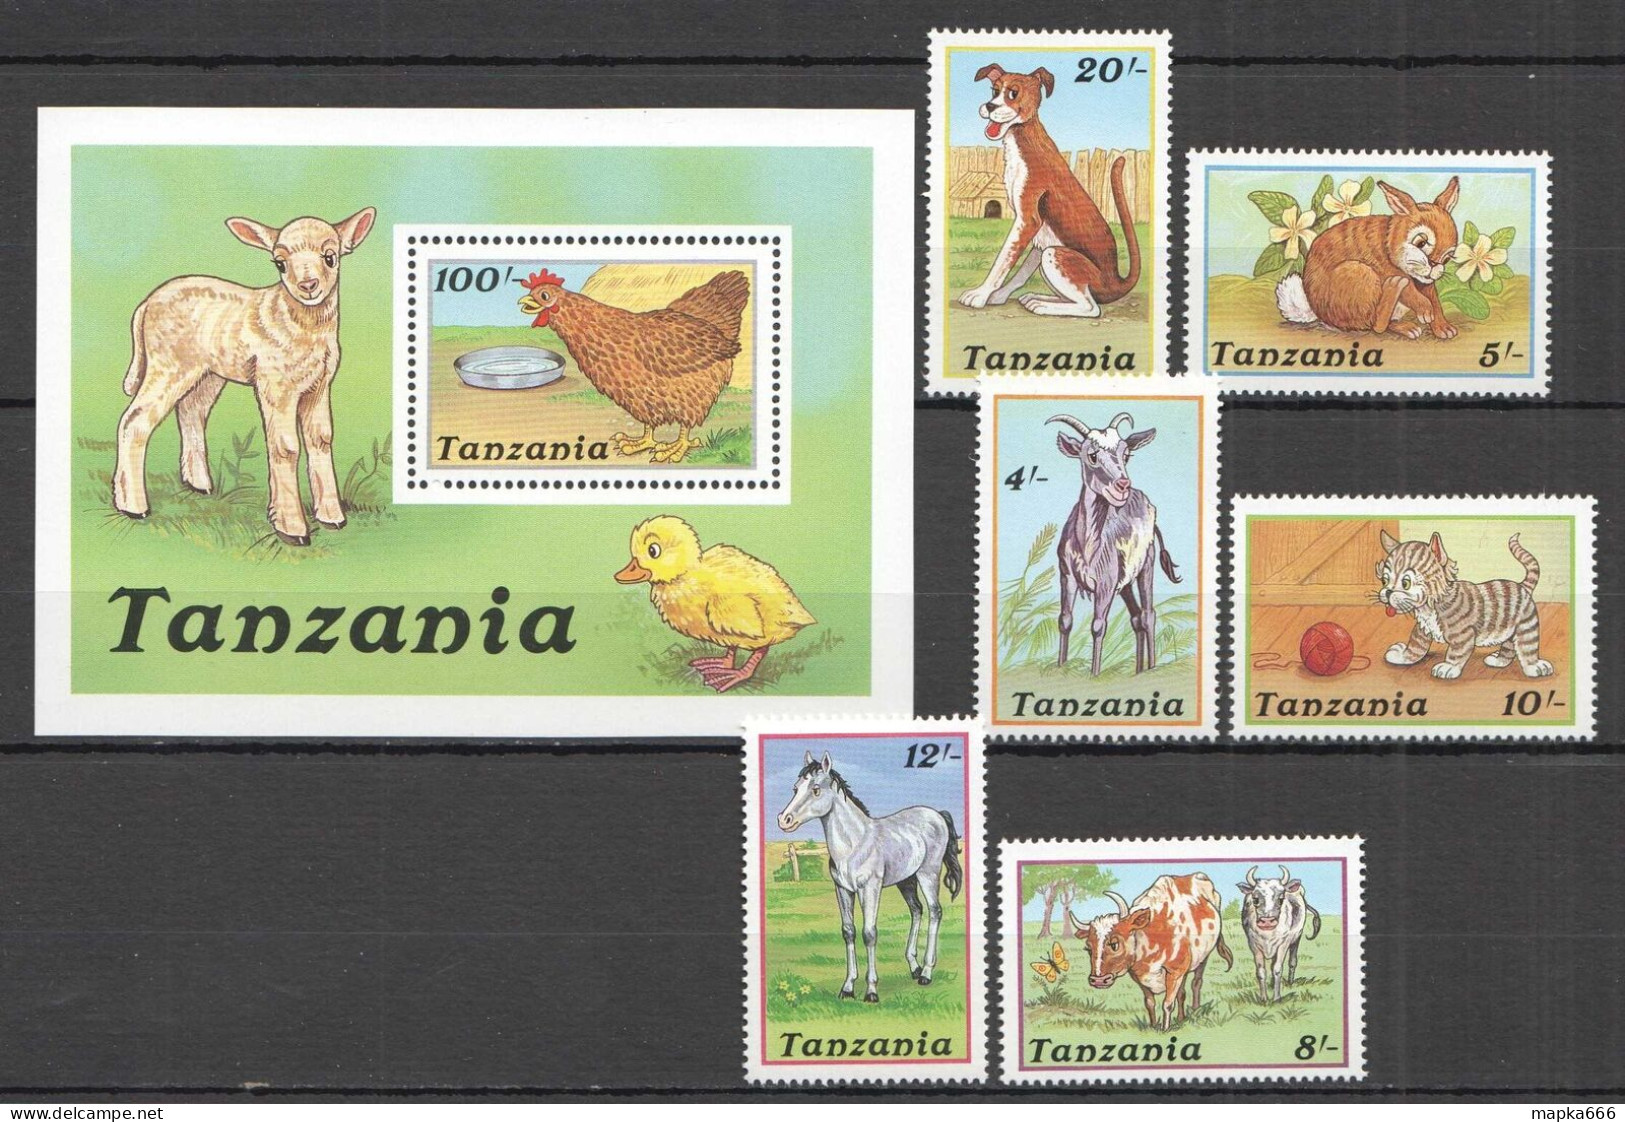 B1443 1988 Tanzania Domestic & Farm Animals #481-86 Bl+Set Mnh - Horses